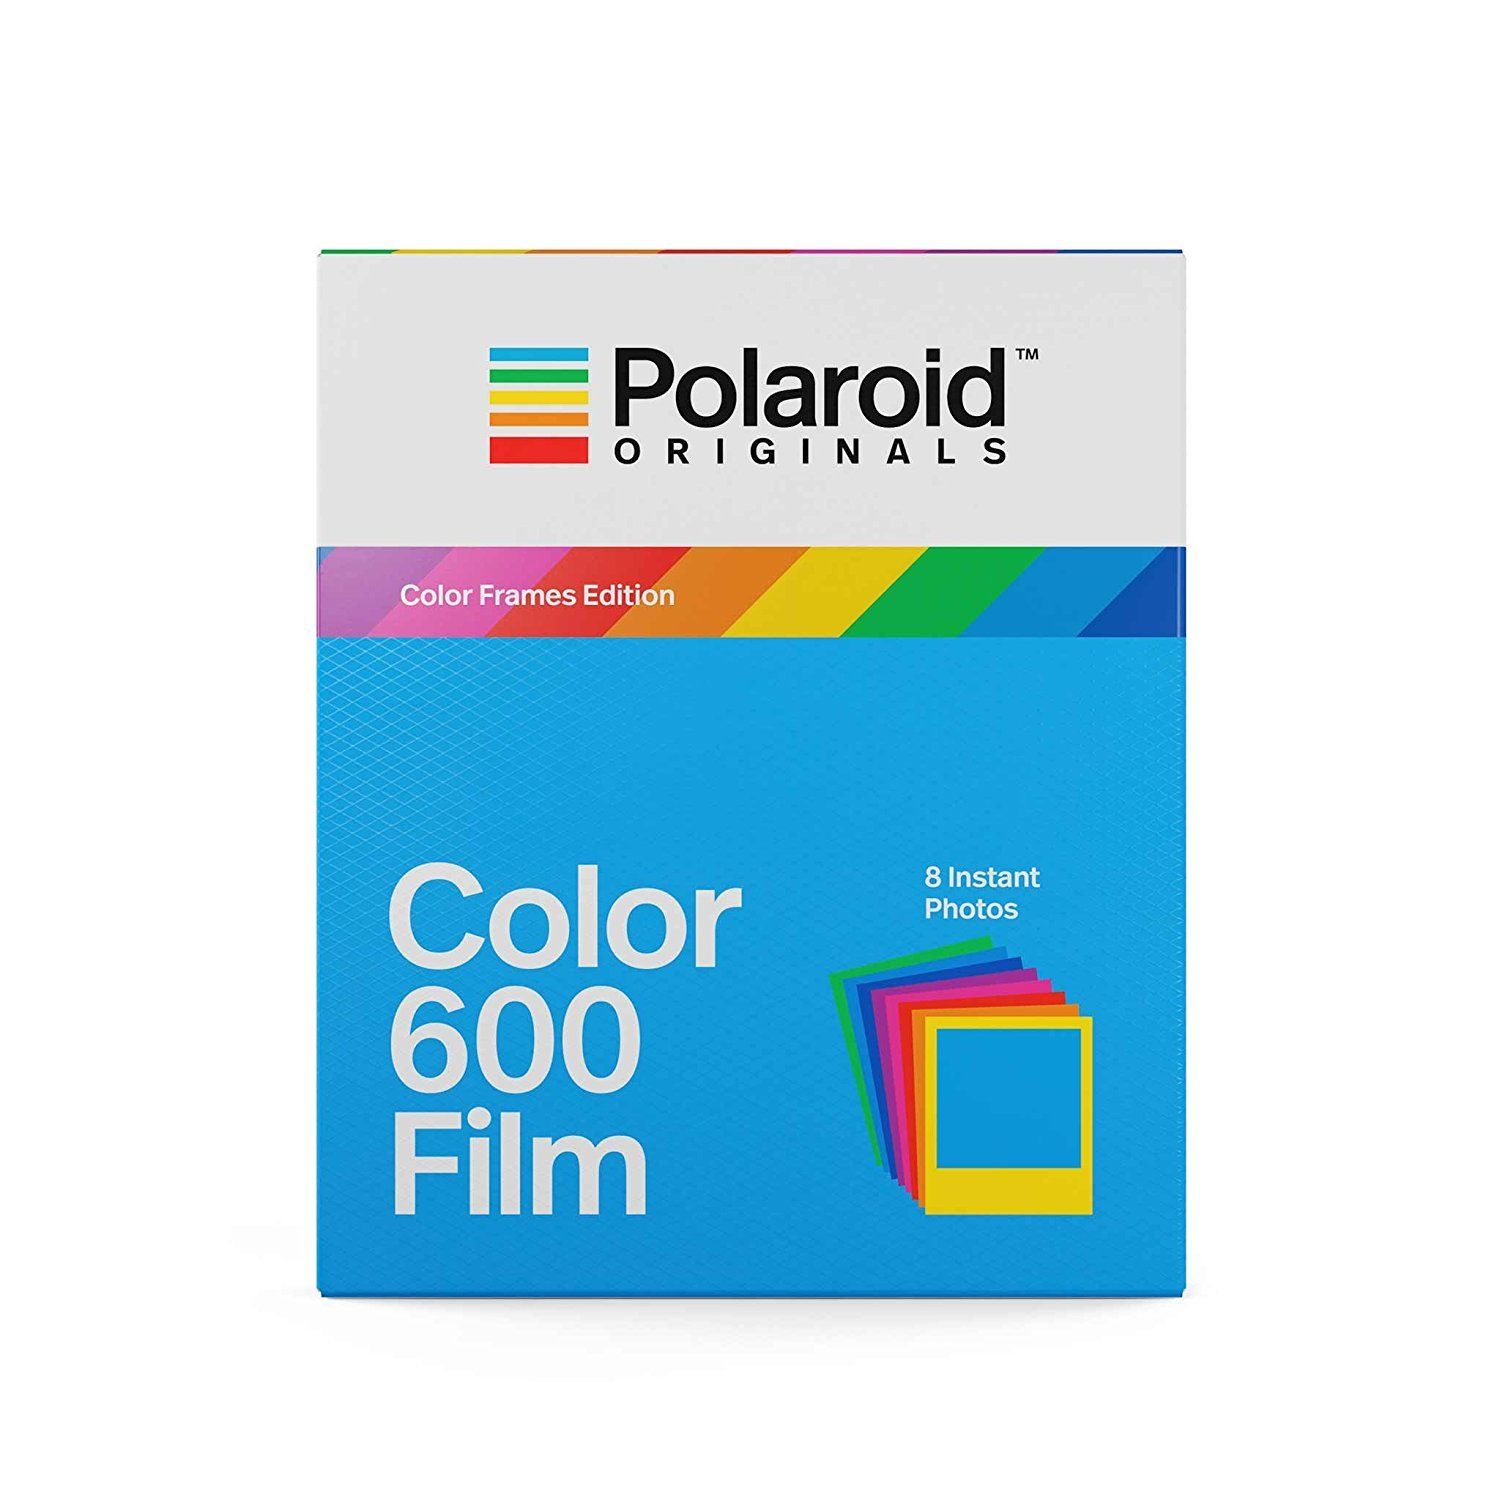 Polaroid Originals 600 Instant Color Film with Color Frames, 8 Photos